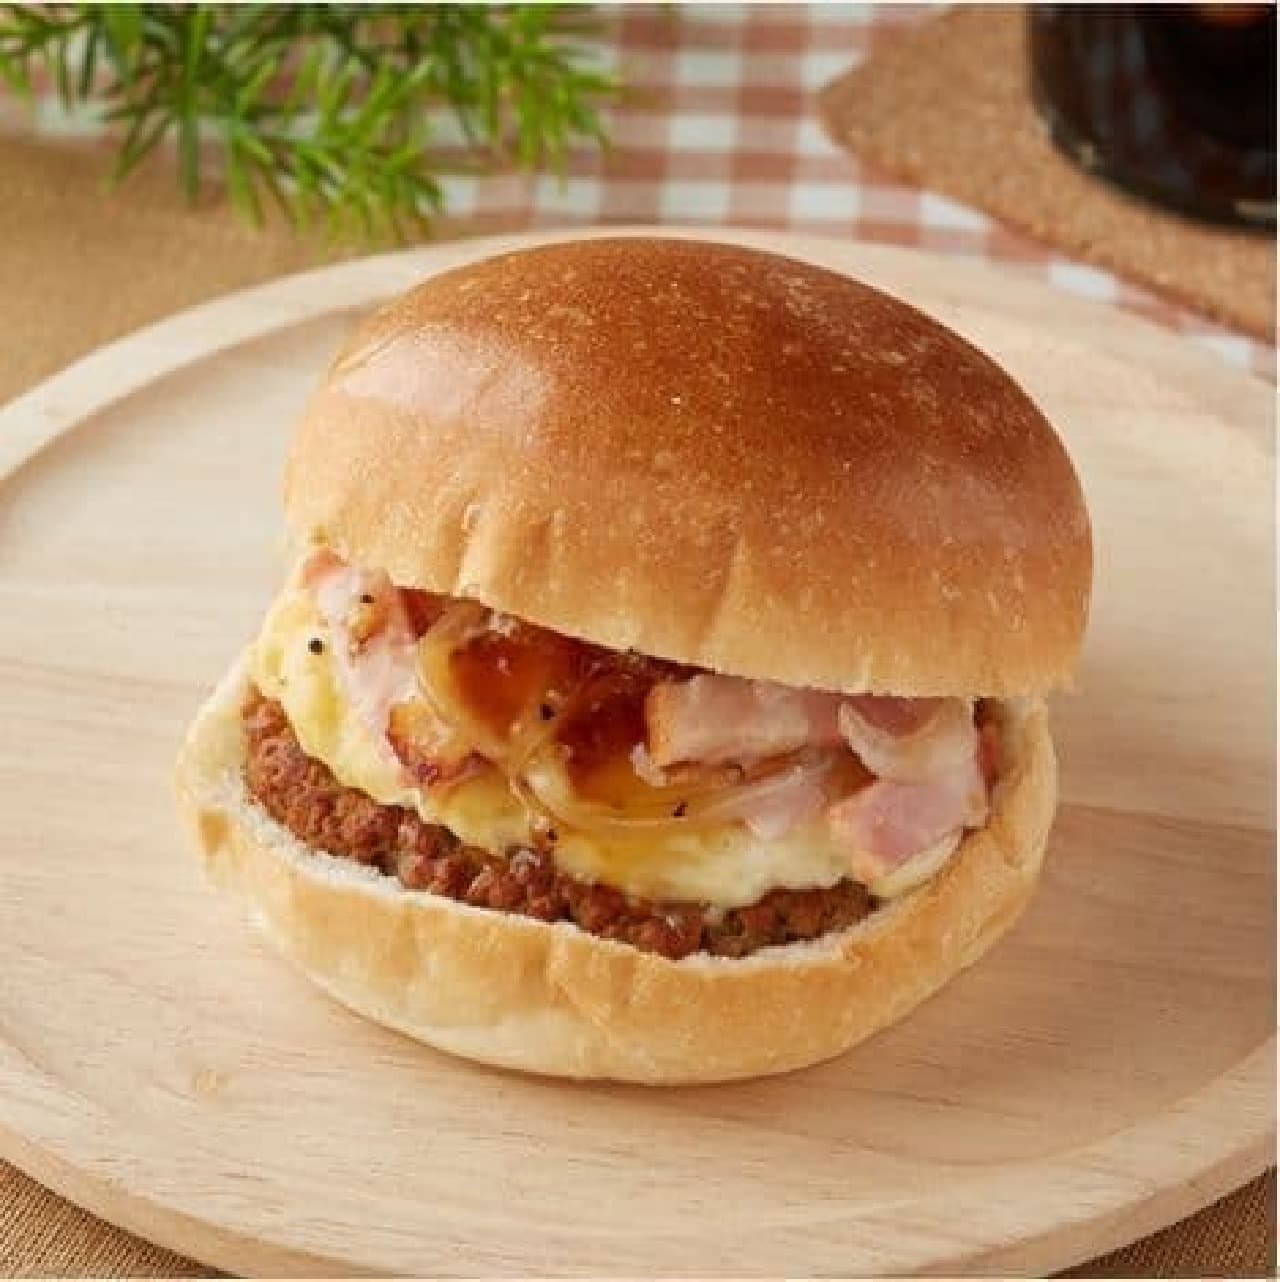 FamilyMart "Bacon & Cheese Sauce Burger"